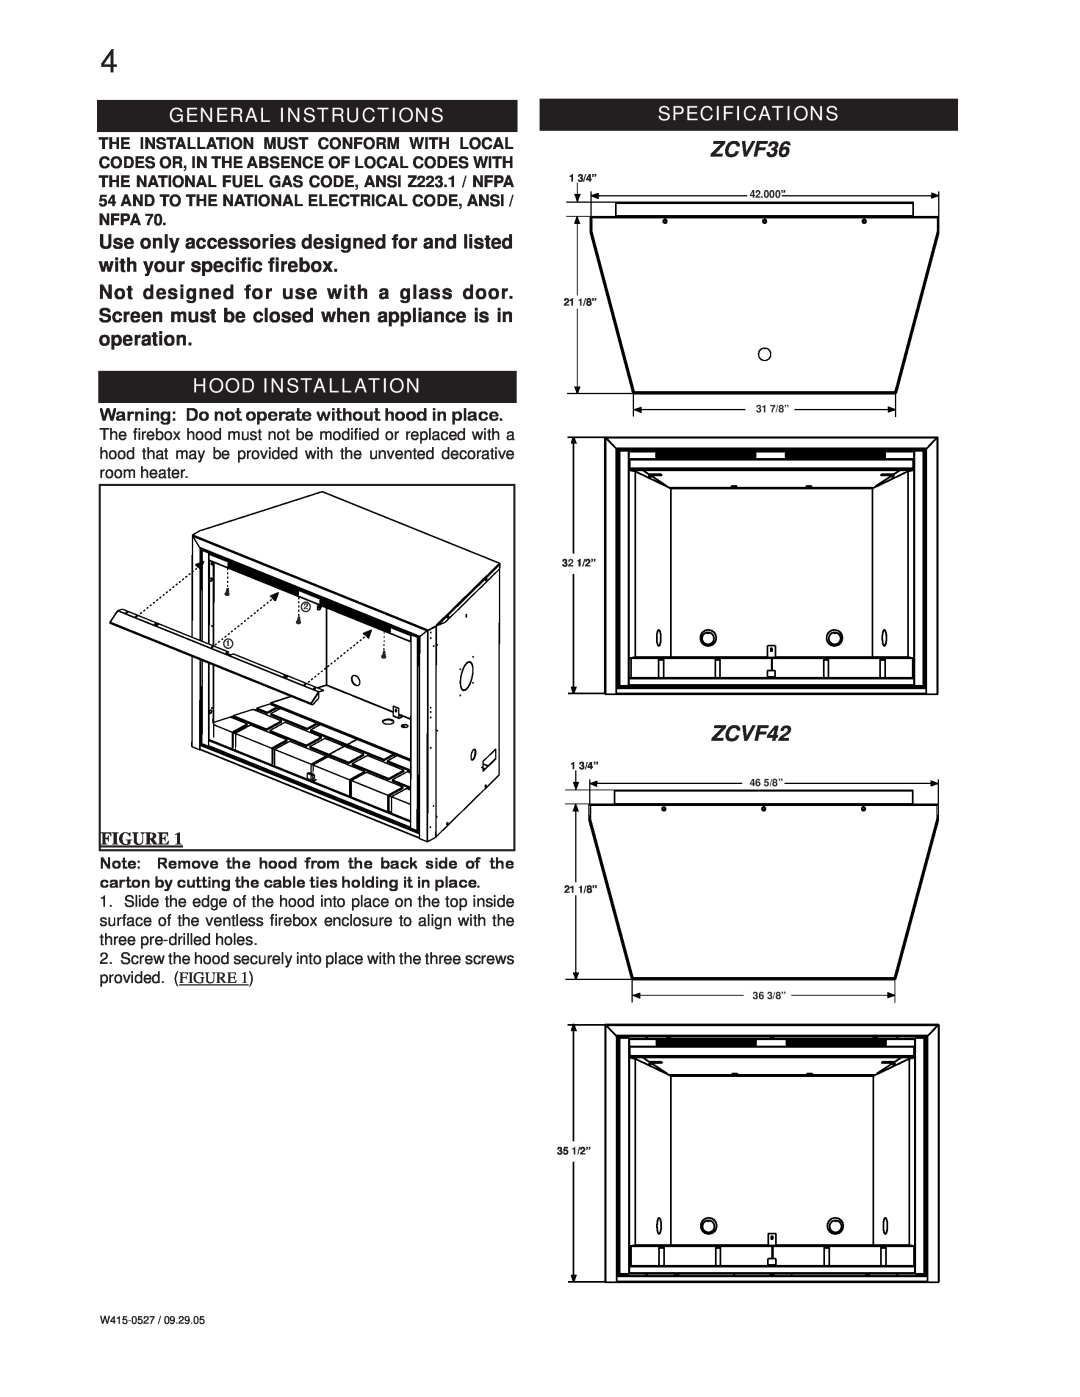 Napoleon Fireplaces ZCVF42 installation instructions ZCVF36, General Instructions, Hood Installation, Specifications 